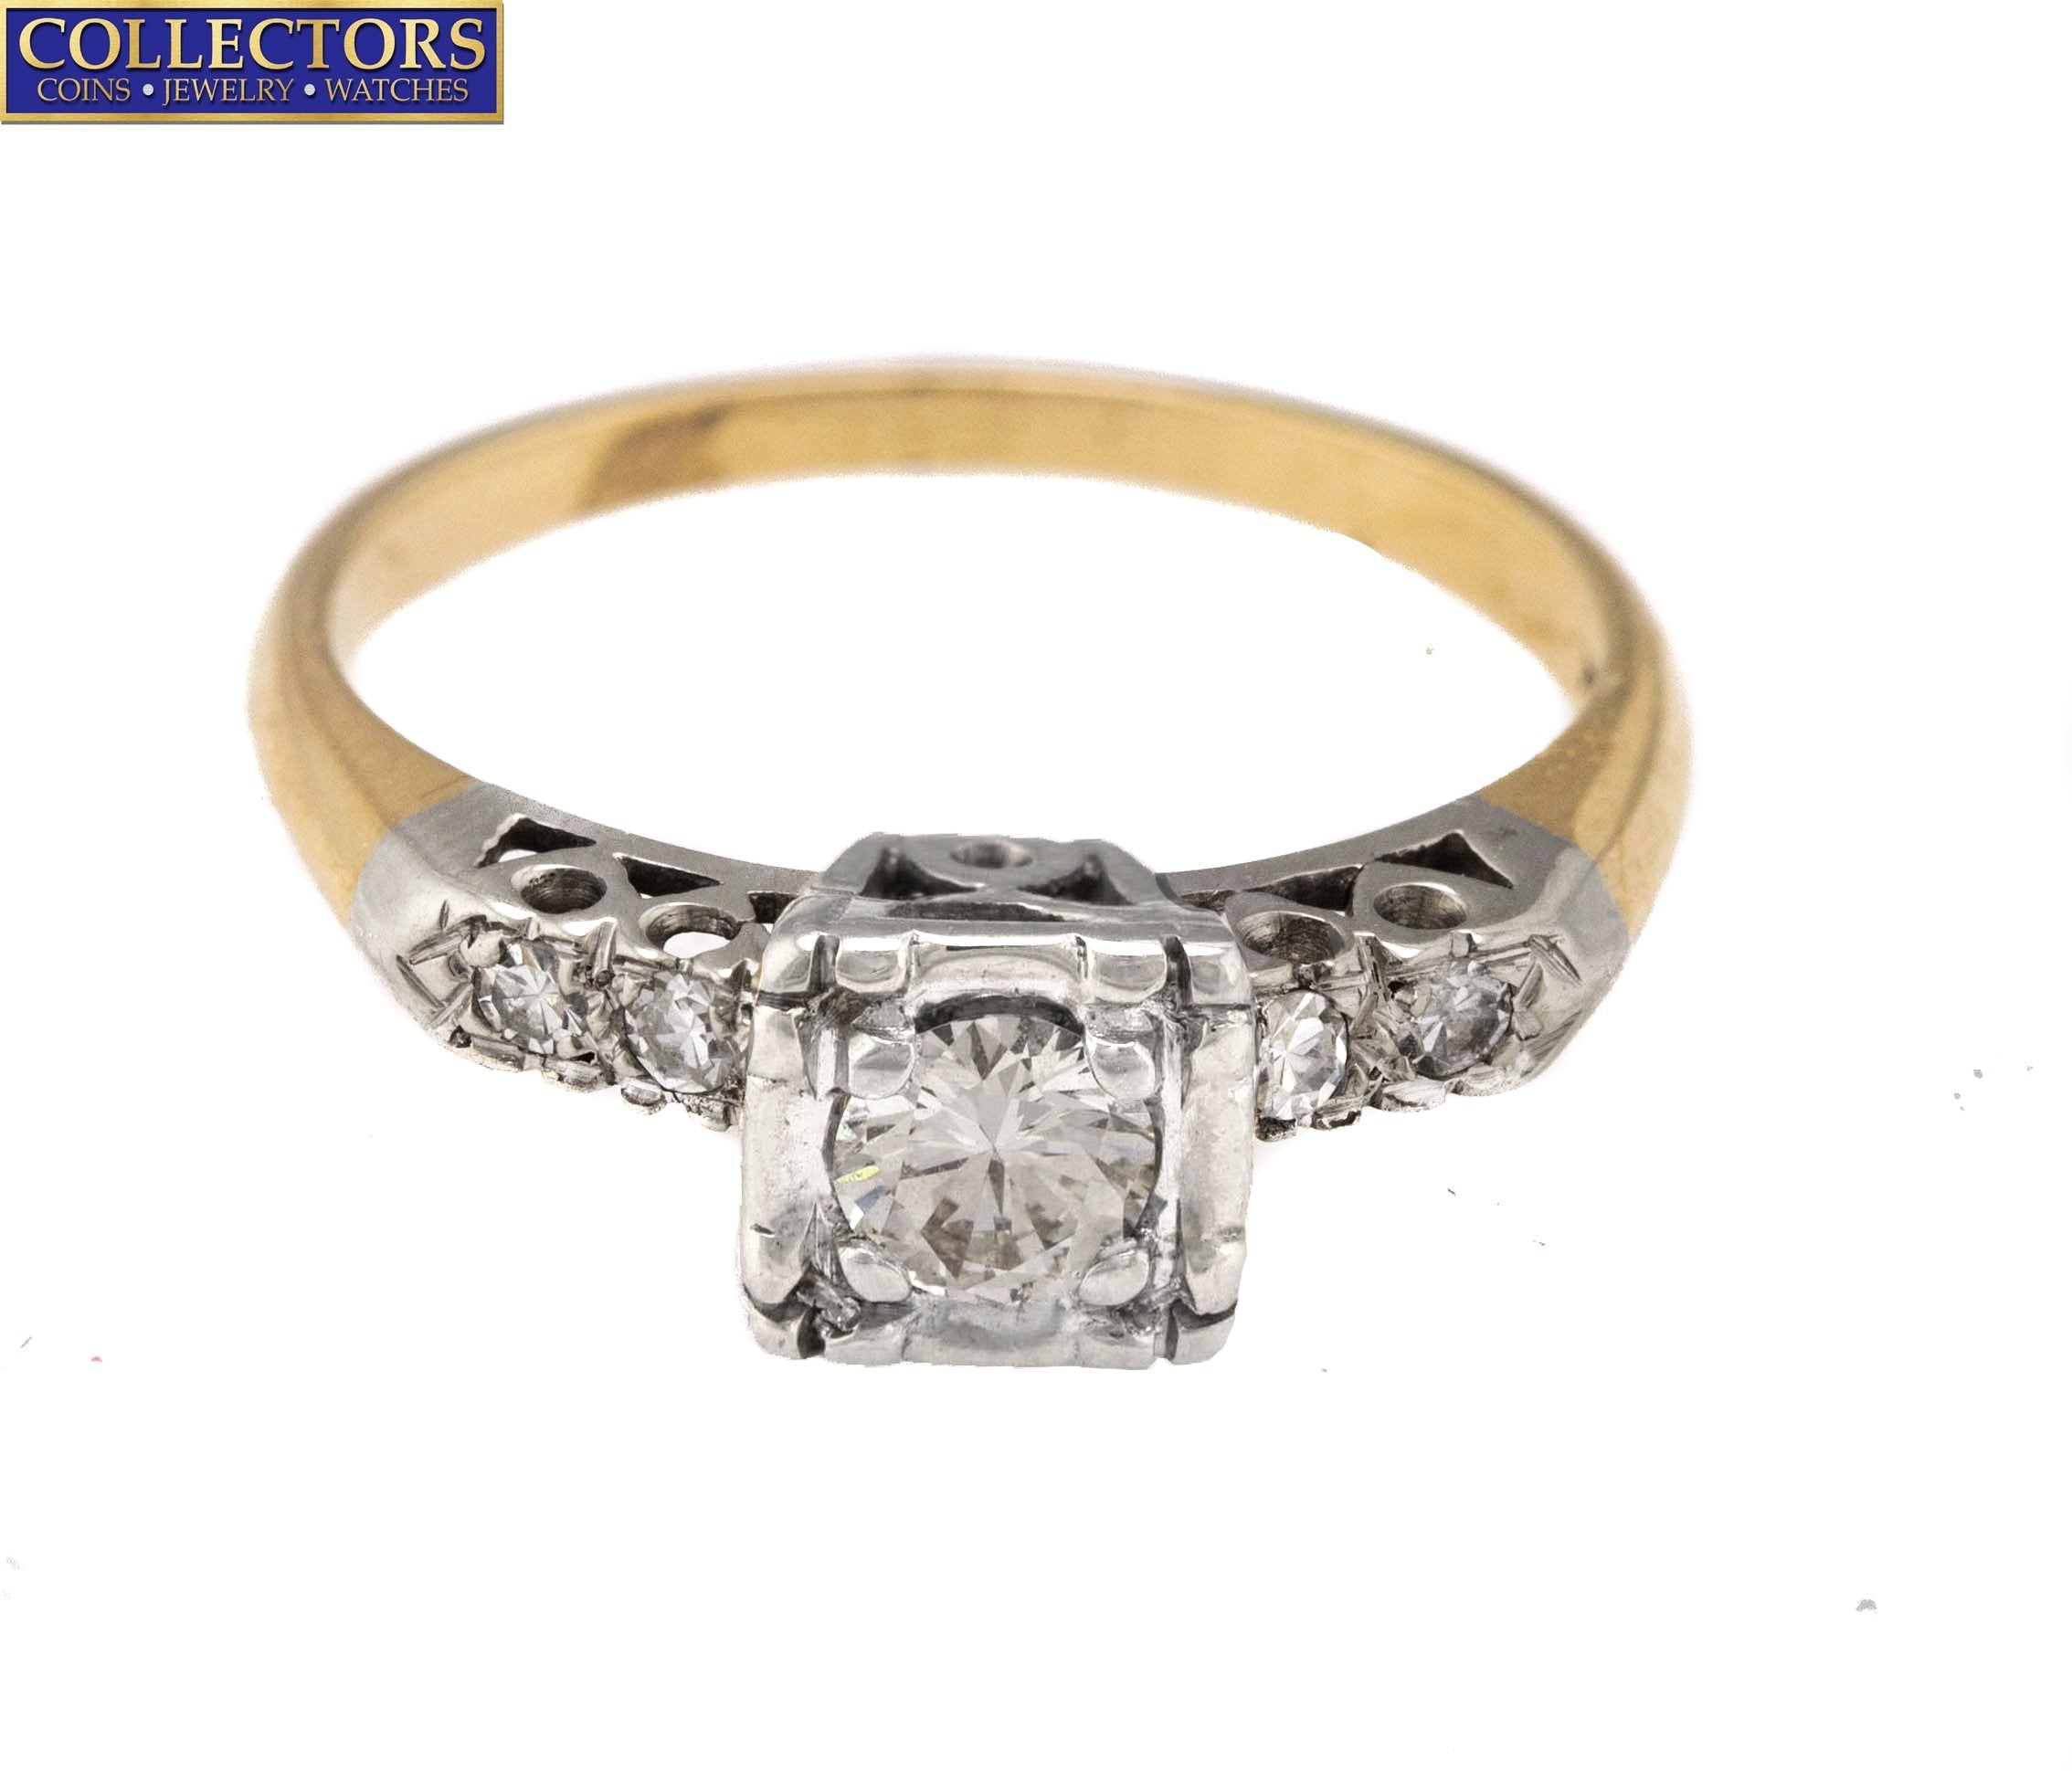 Ladies 14K White/Yellow Gold 0.28CT Transition Round Cut Diamond Engagement Ring